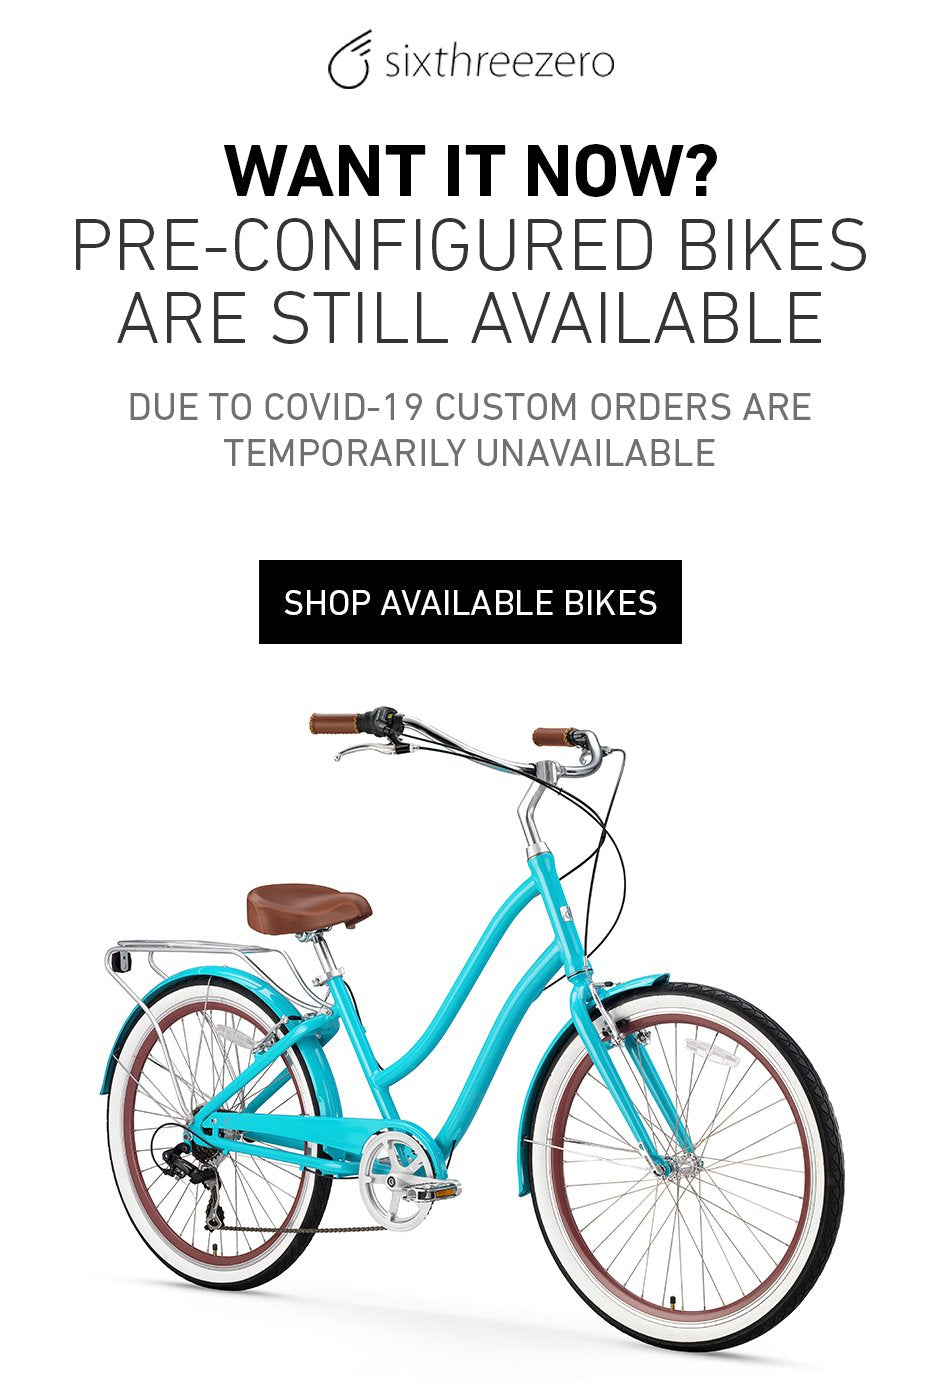 online cycle order